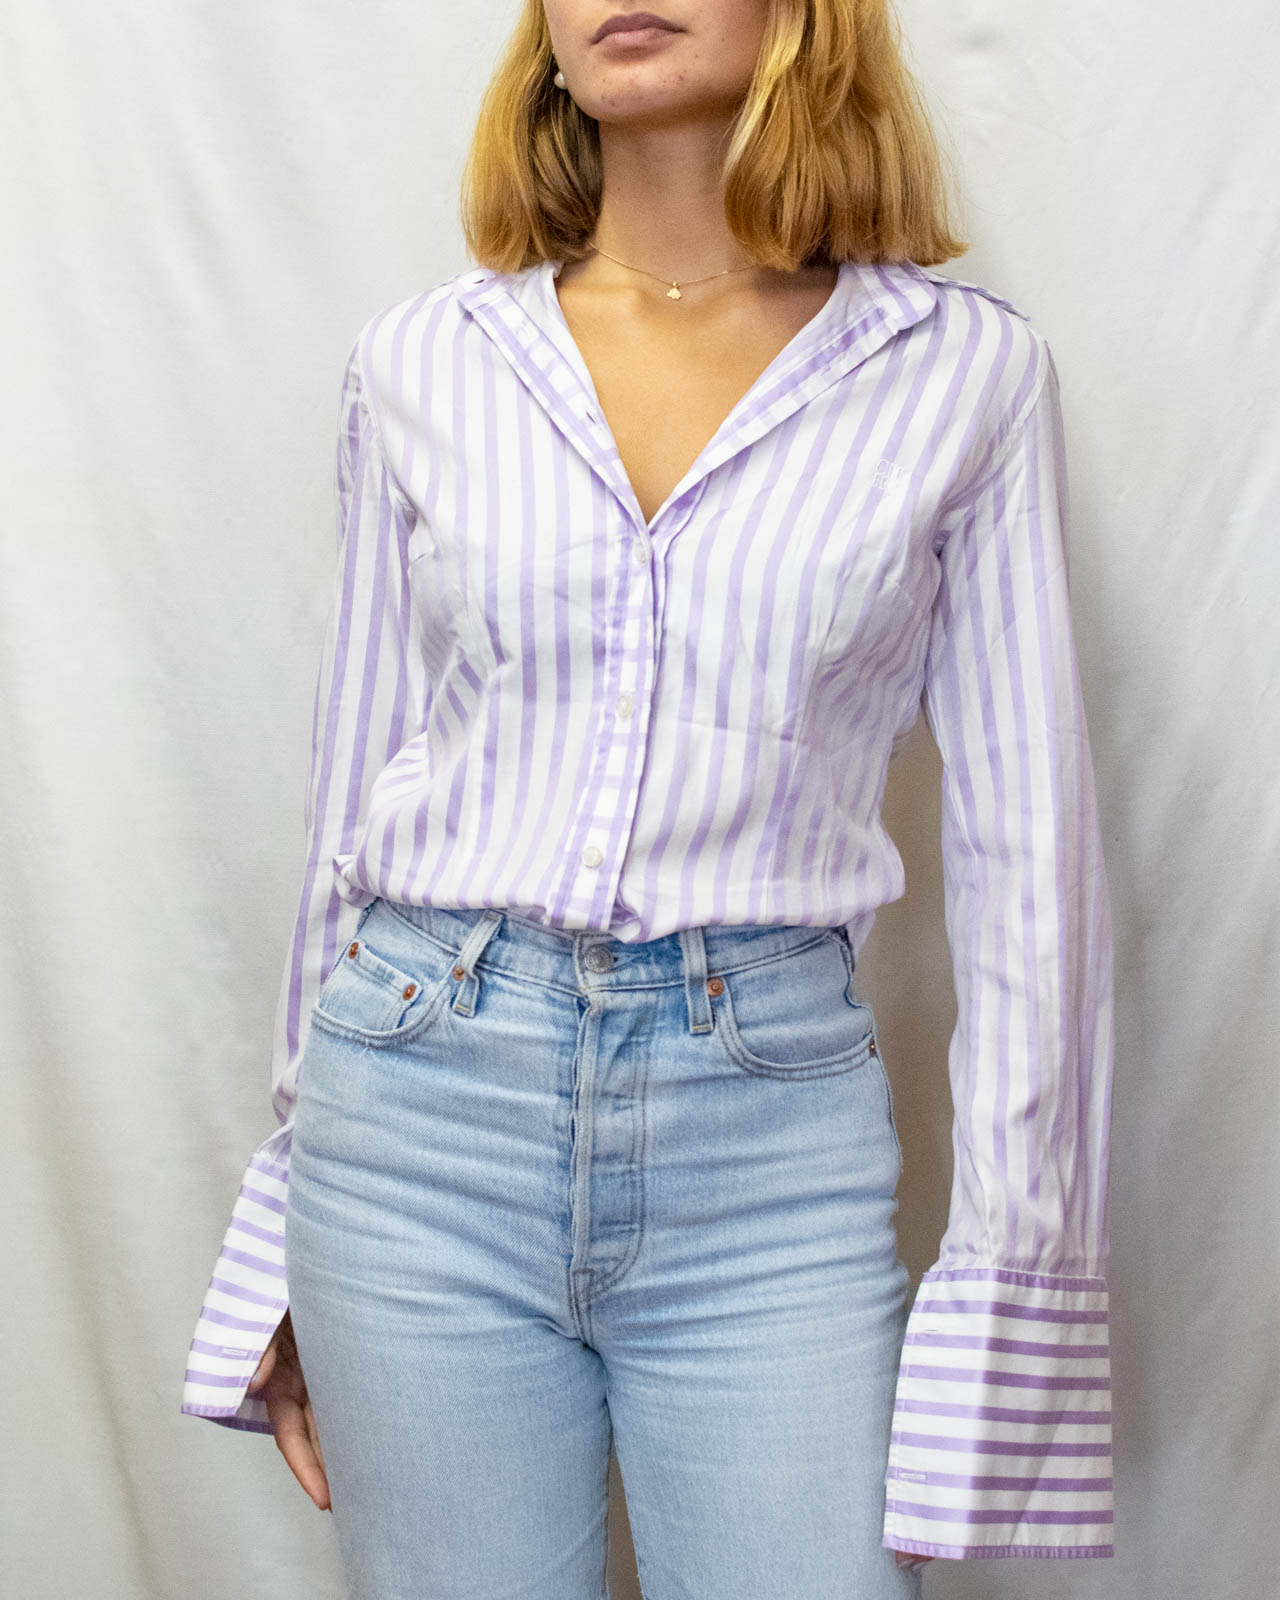 Chemise à manches blanches et lilas Carolina Herrera - Fabriquée au Portugal